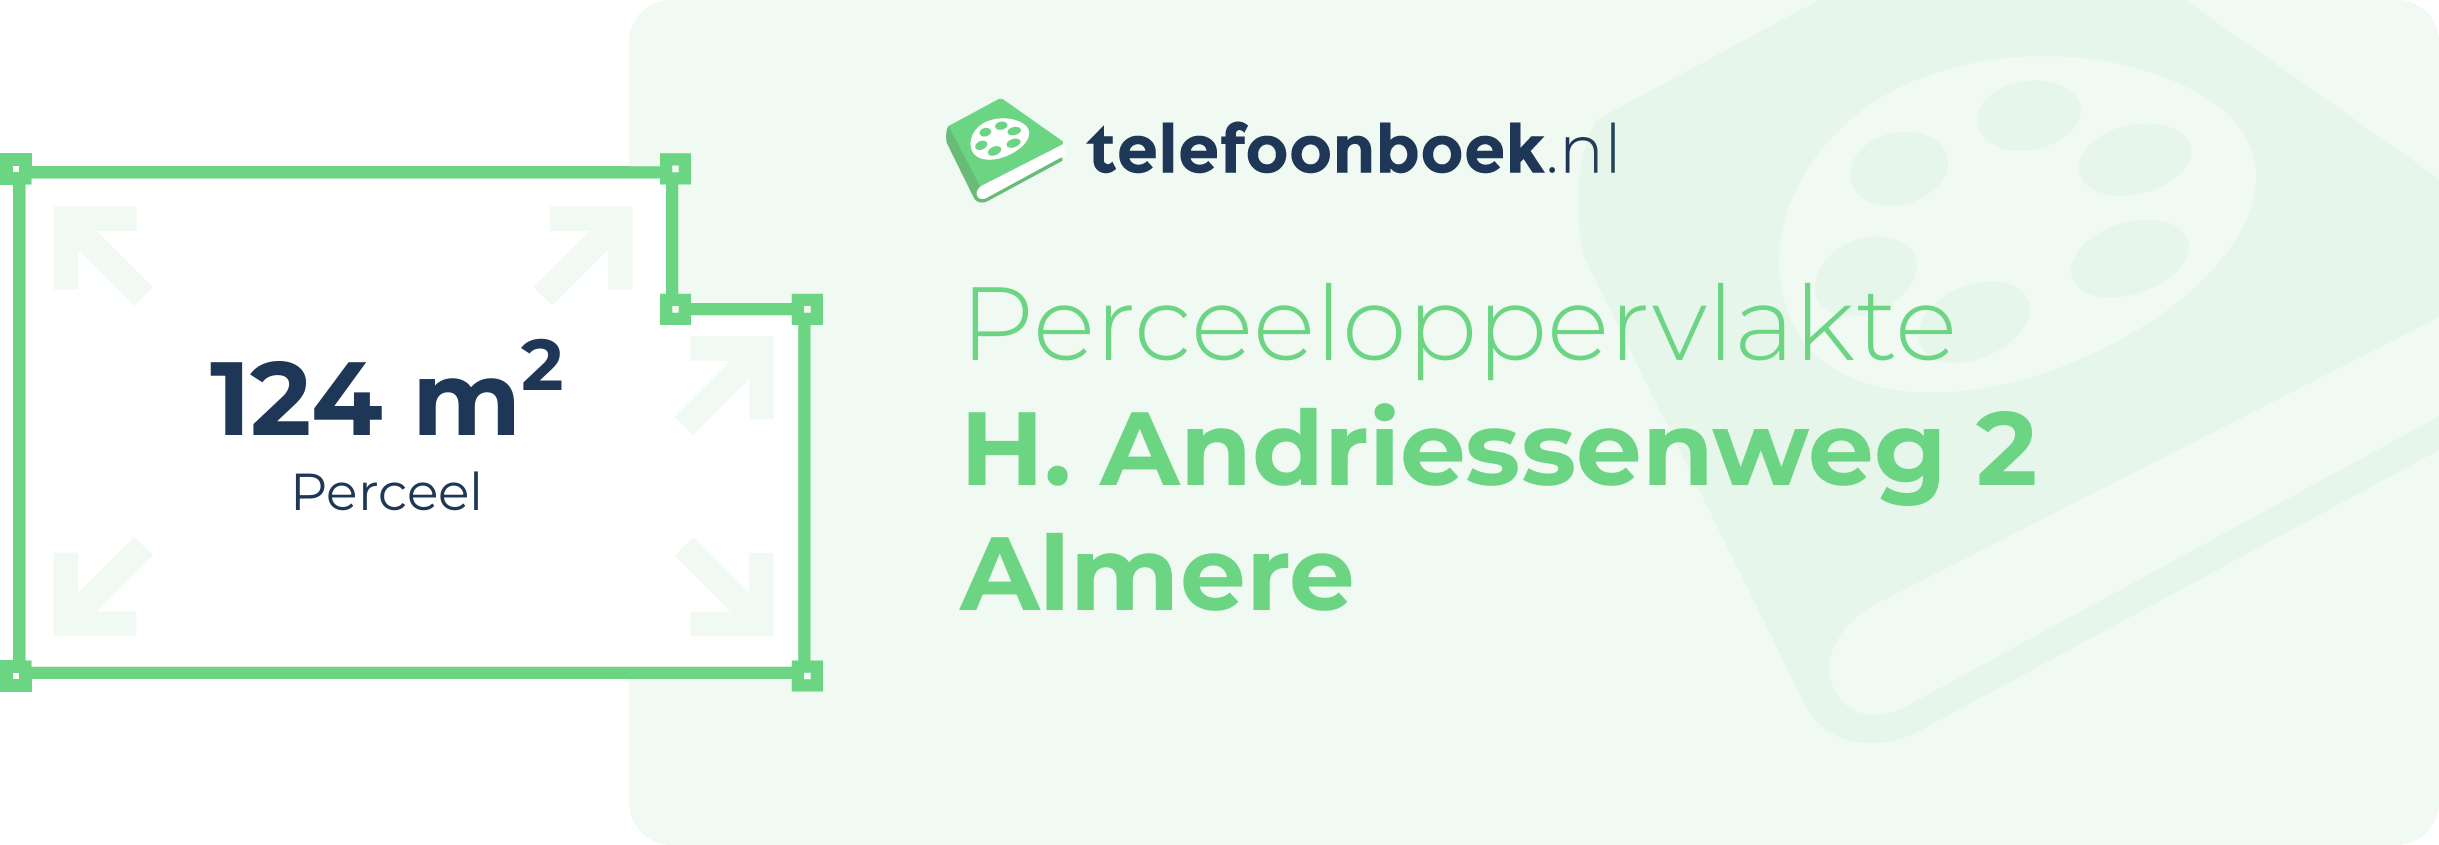 Perceeloppervlakte H. Andriessenweg 2 Almere